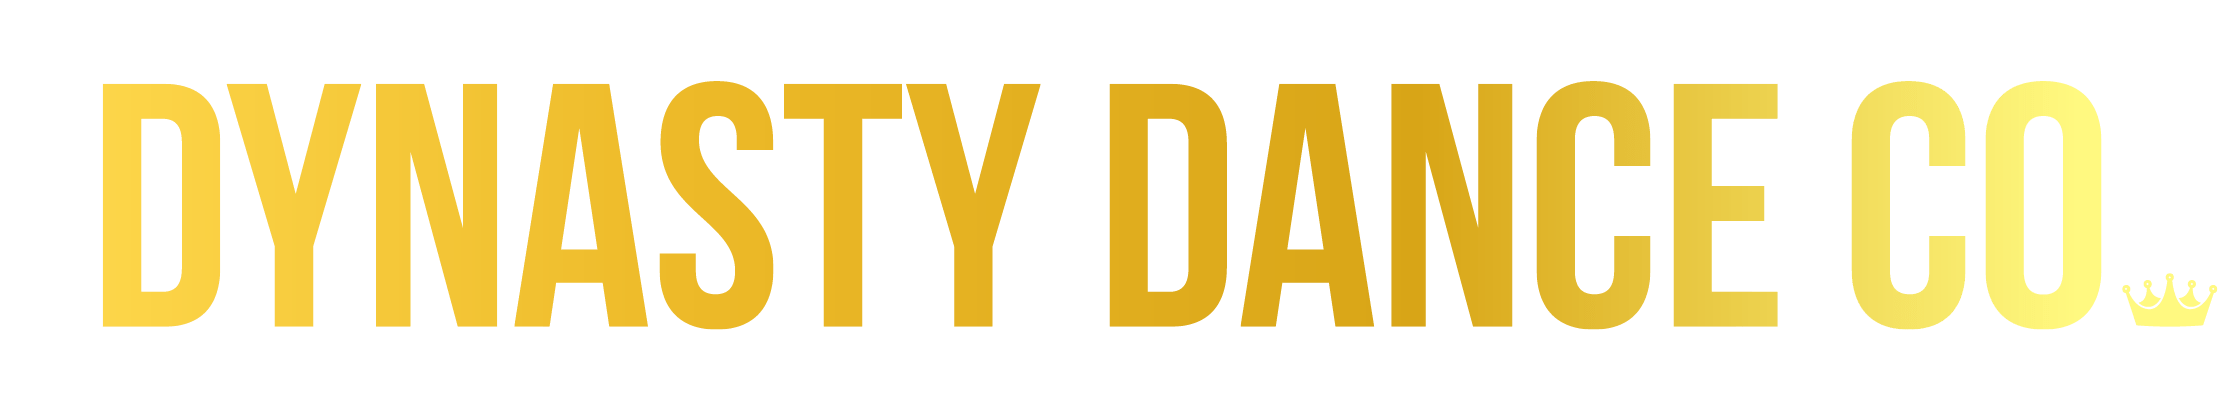 Dynasty Dance Co. Logo